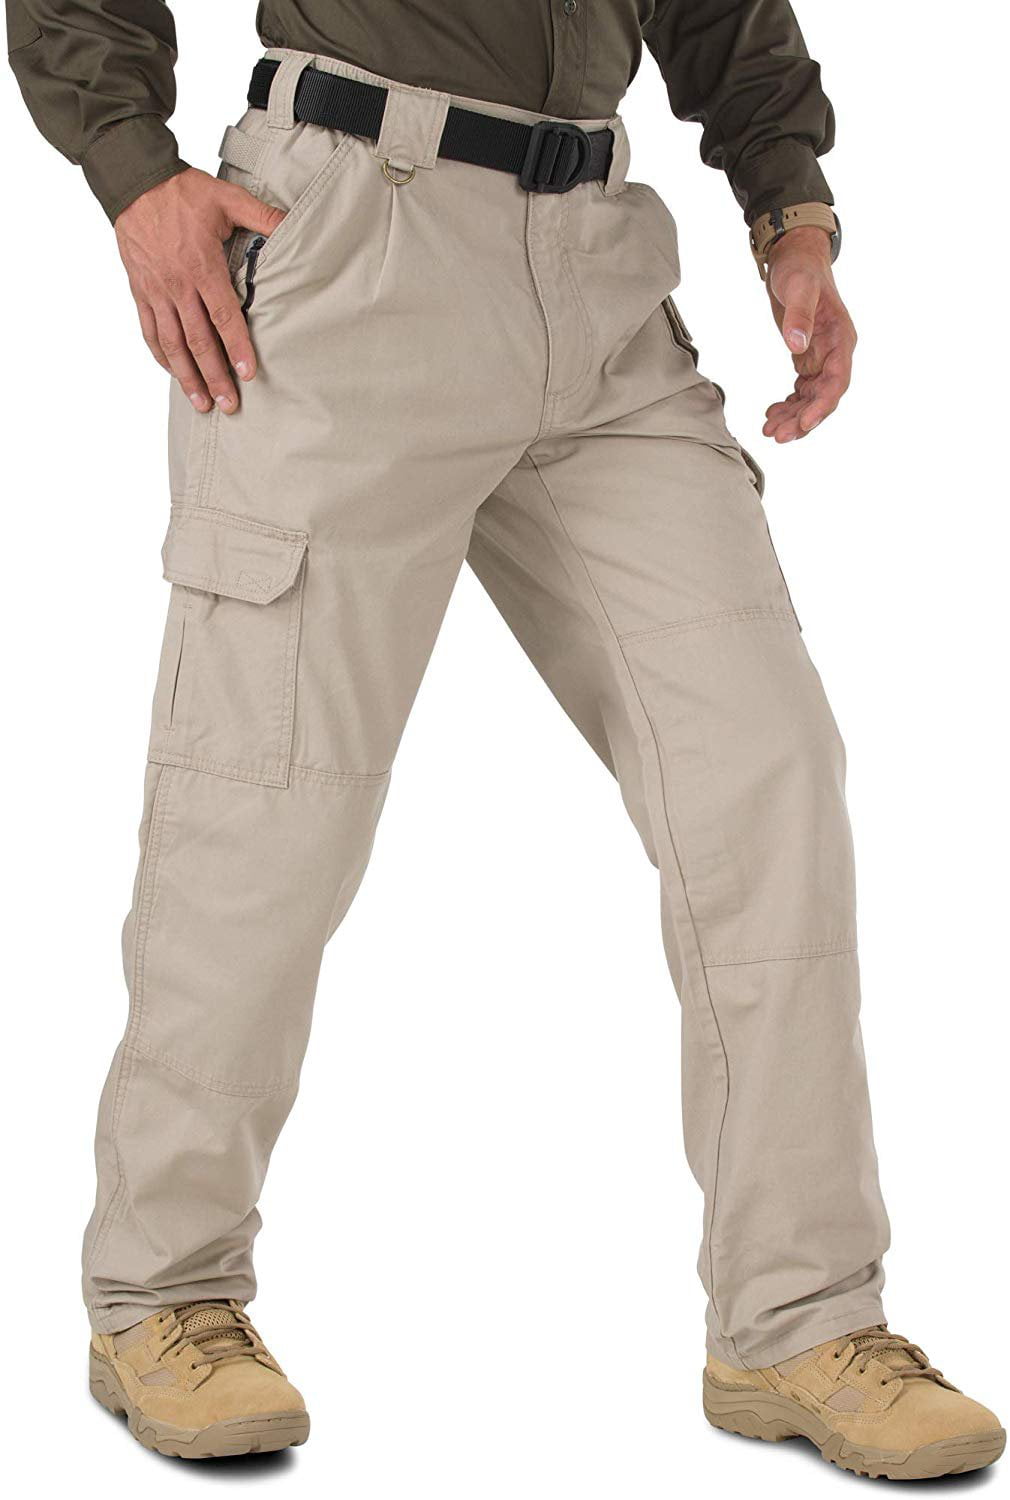 Cargo pants TRUSPEC Tactical pants Ripstop pant tactical Pants 511  Tactical trousers png  PNGWing